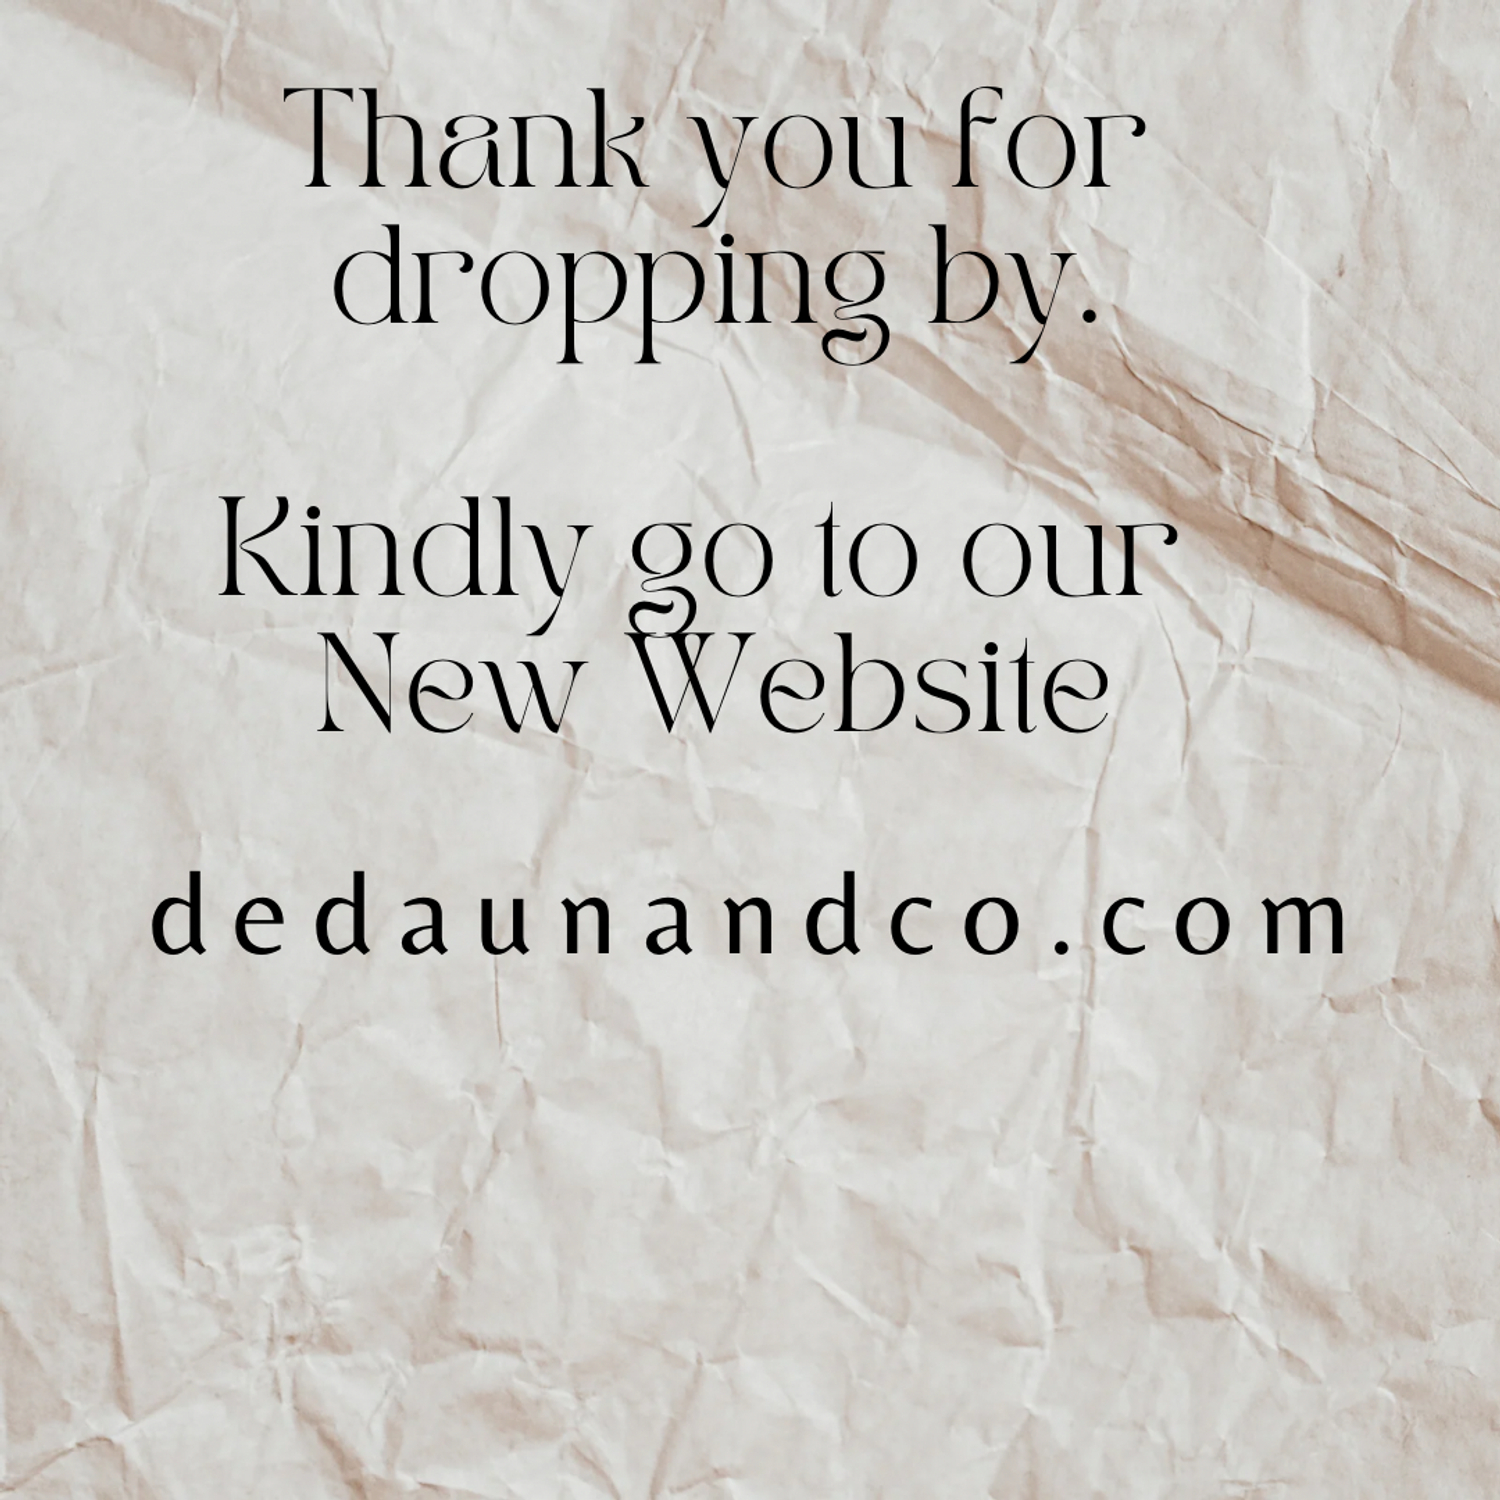 Dedaun+co. | Visit Our New Website: dedaunandco.com